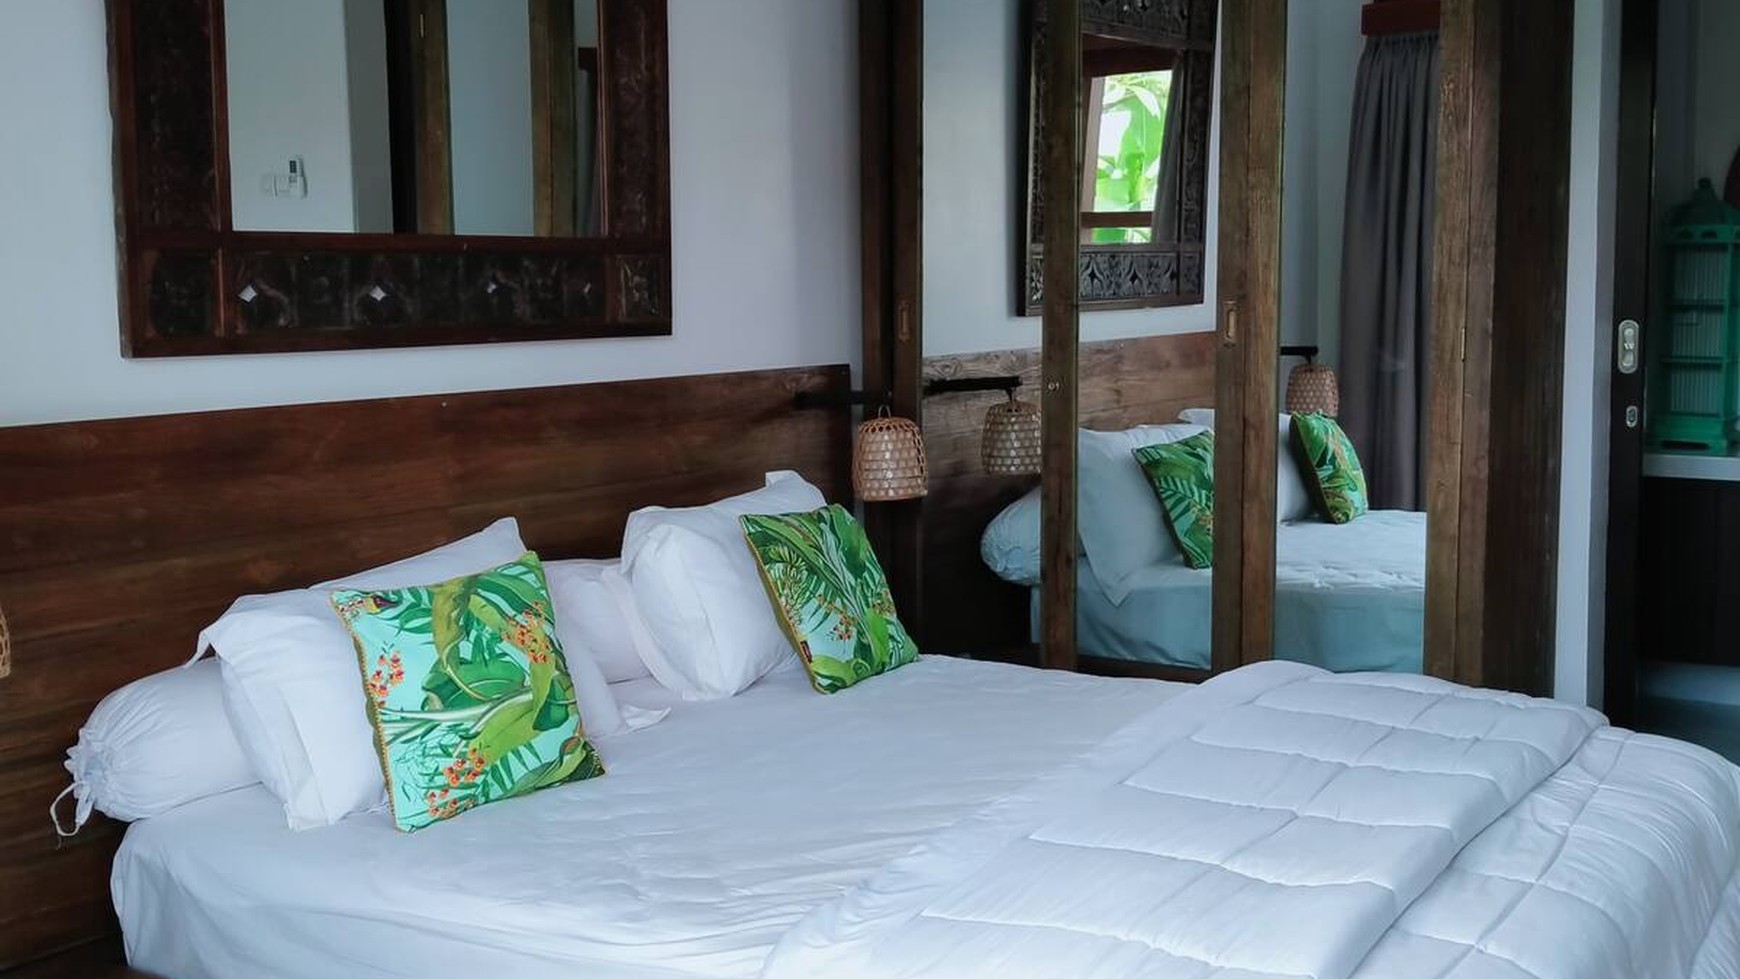 Villa modern, cantik dan siap huni cocok untuk invest dan huni di Jimbaran Bali.